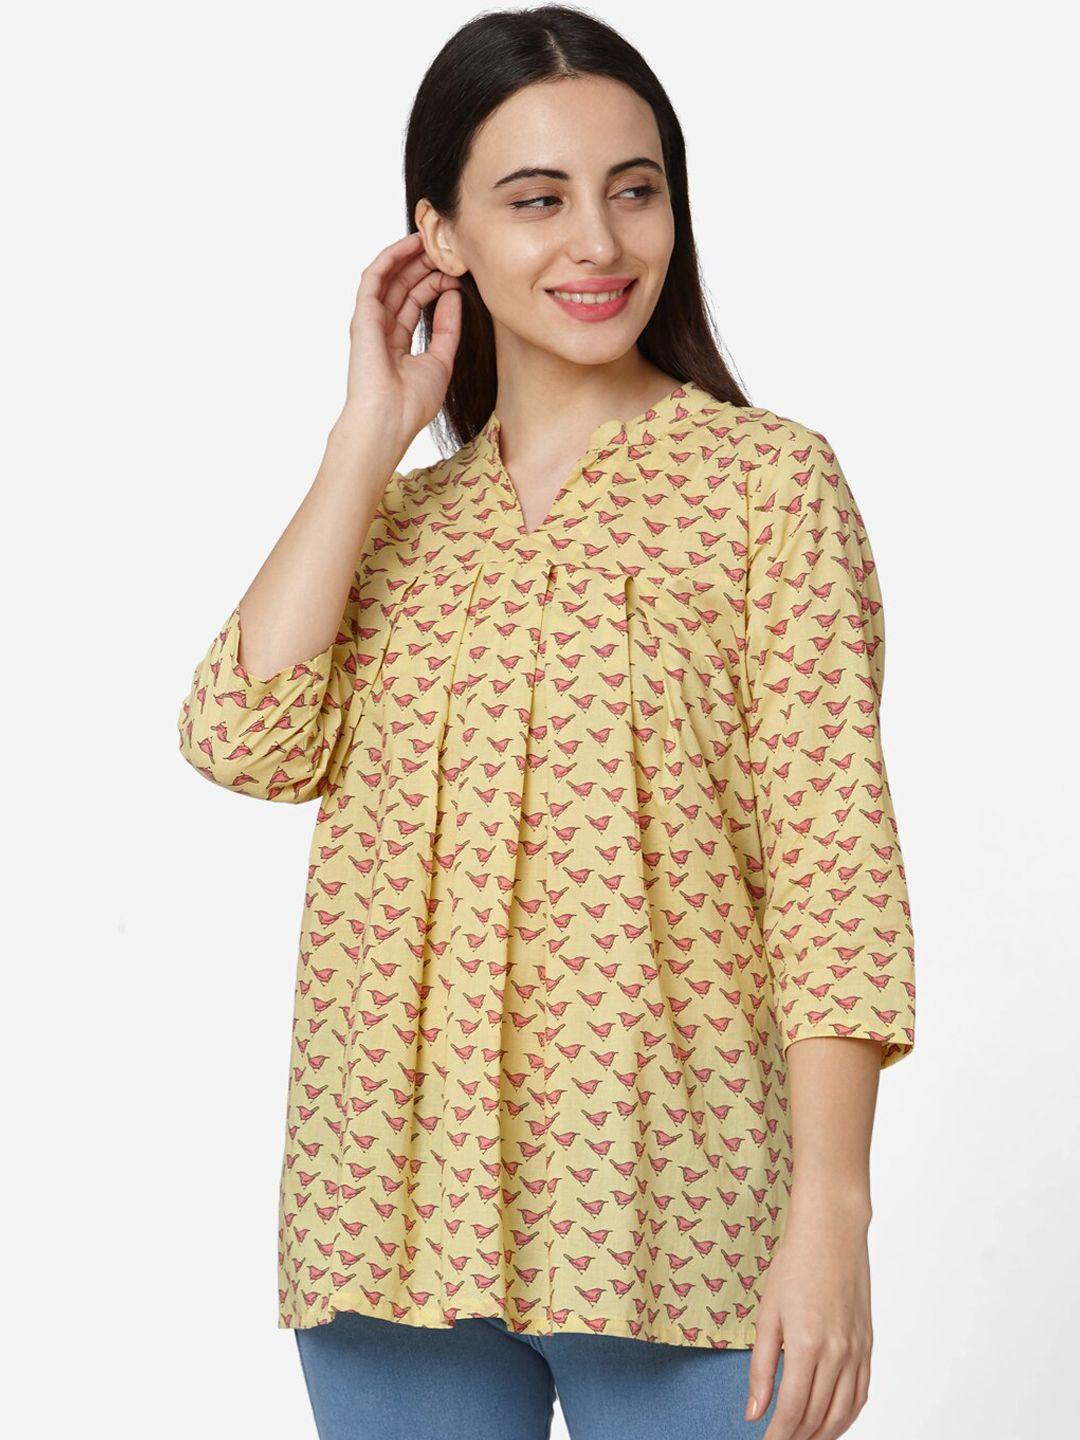 saanjh-women's-yellow-&-pink-printed-tunic